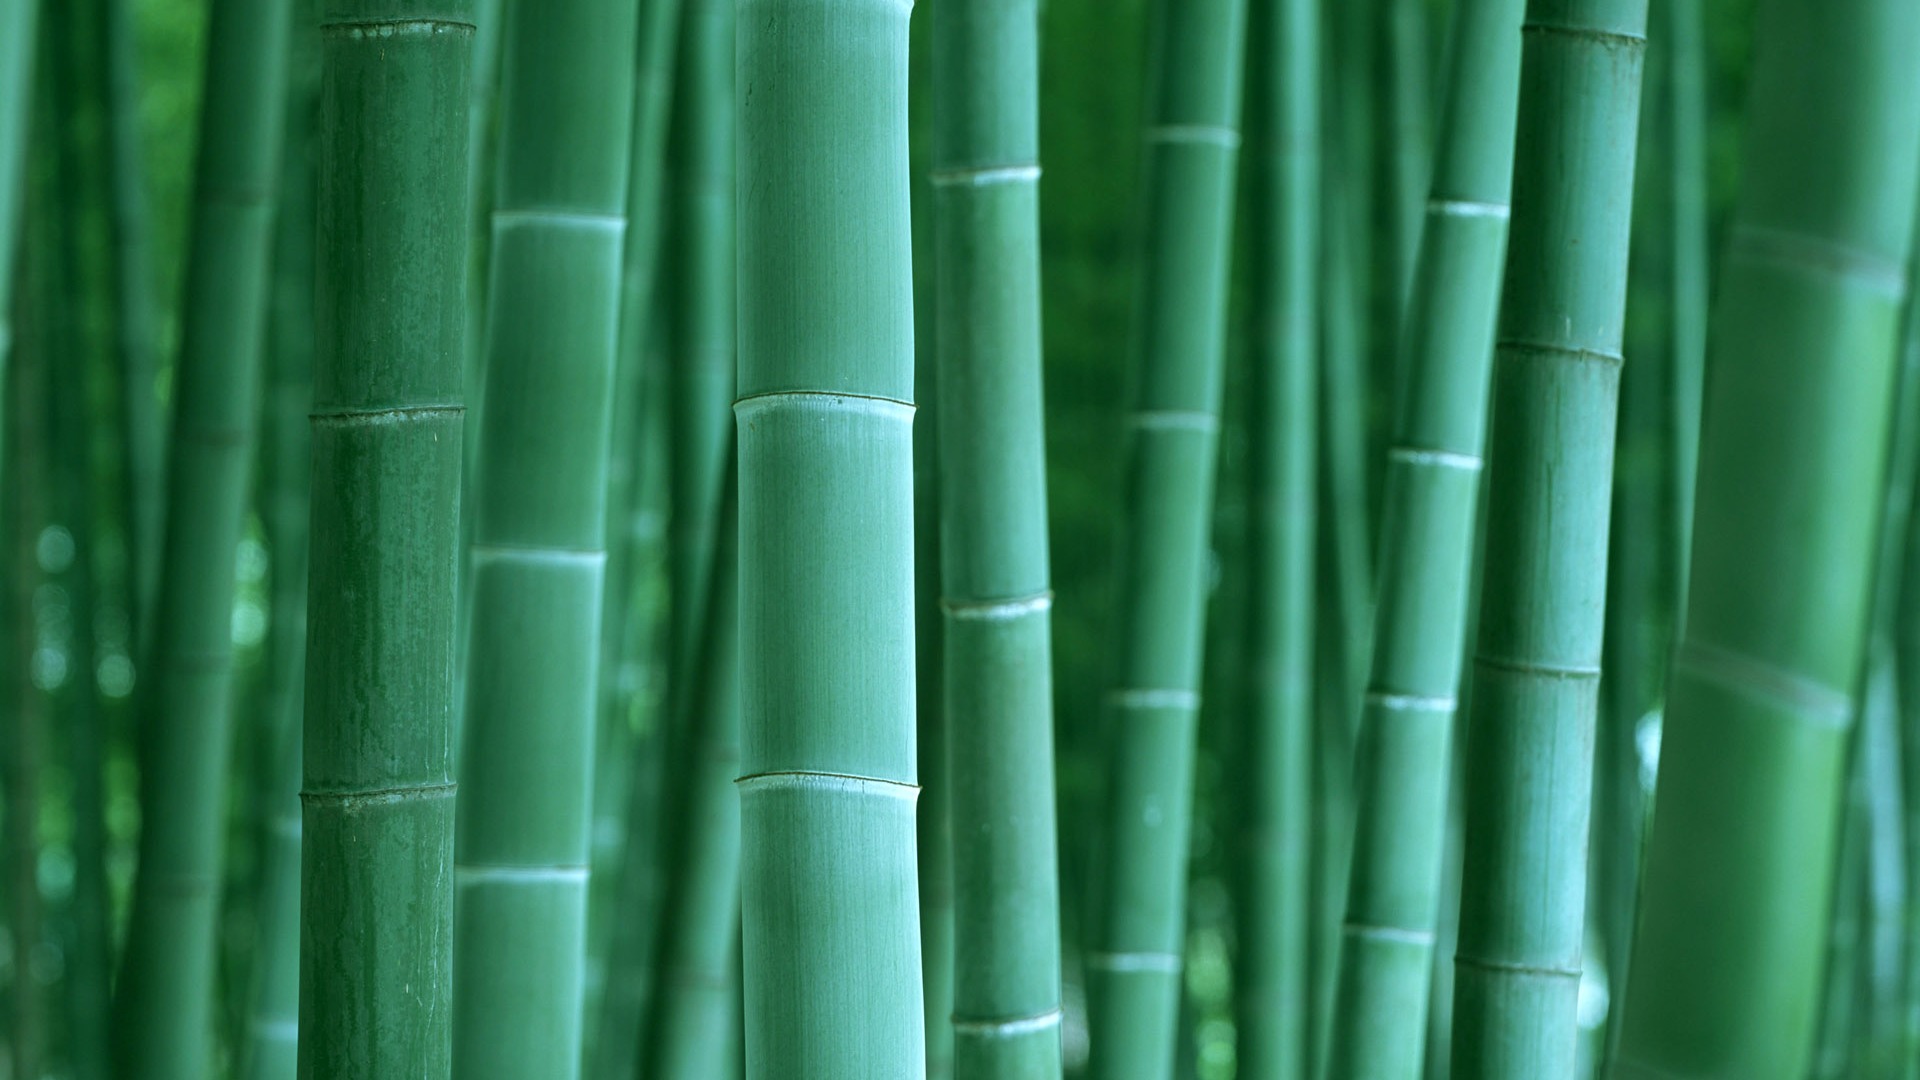 Green bamboo wallpaper albums #2 - 1920x1080